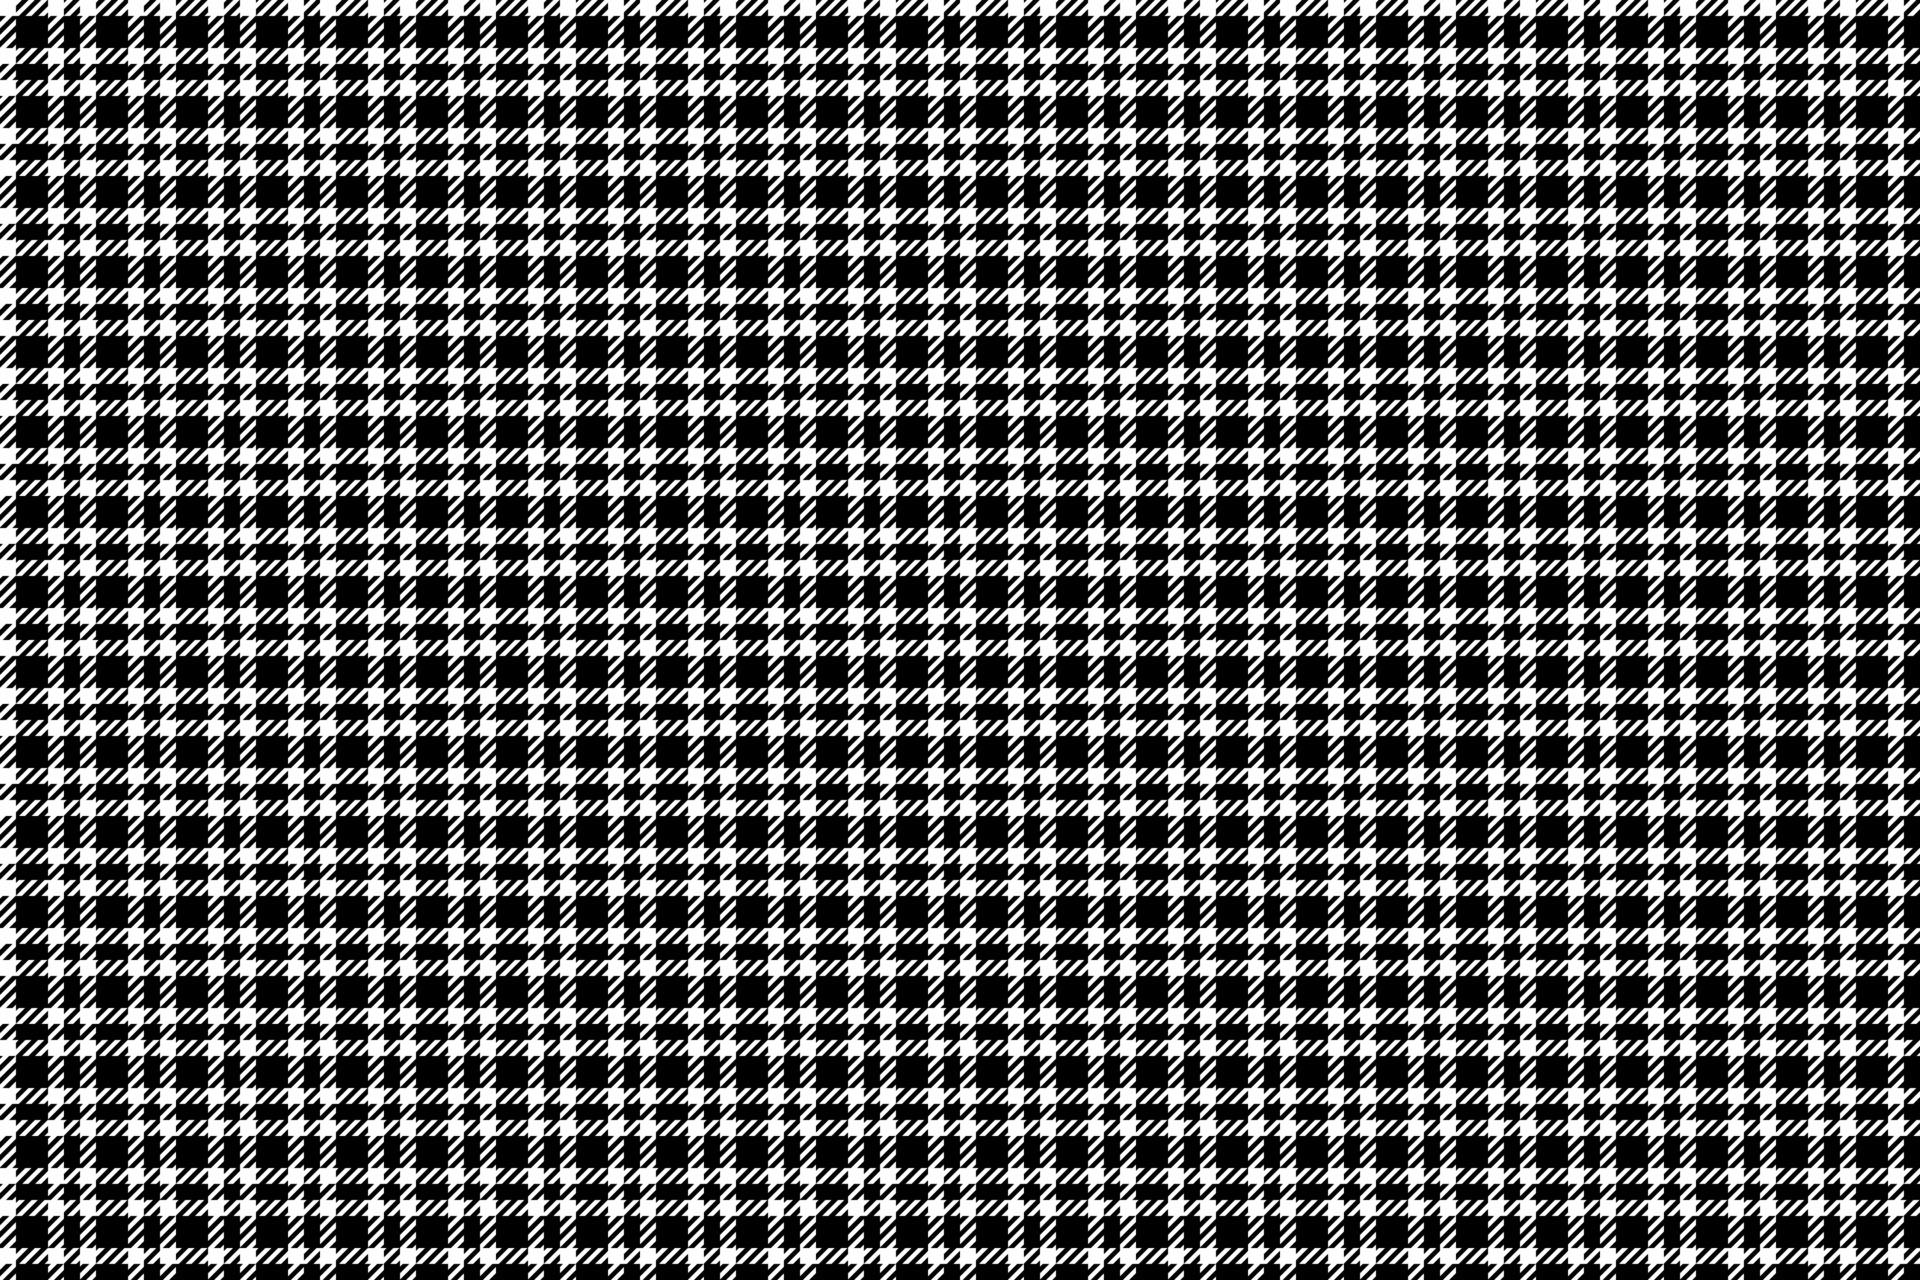 padrão de xadrez preto e branco 2092172 Vetor no Vecteezy